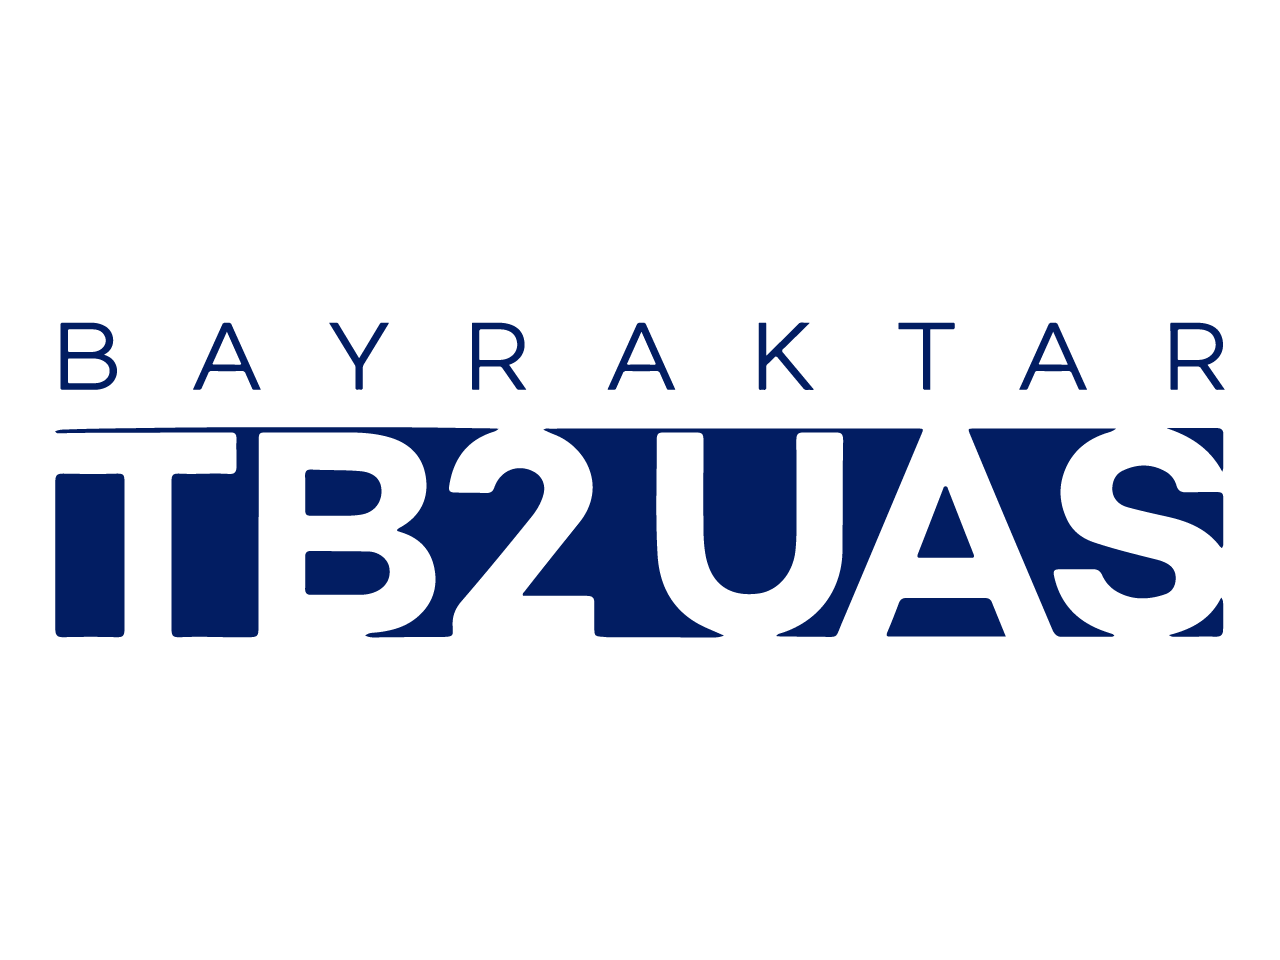 Bayraktar TB2 Armed UAV Logo png